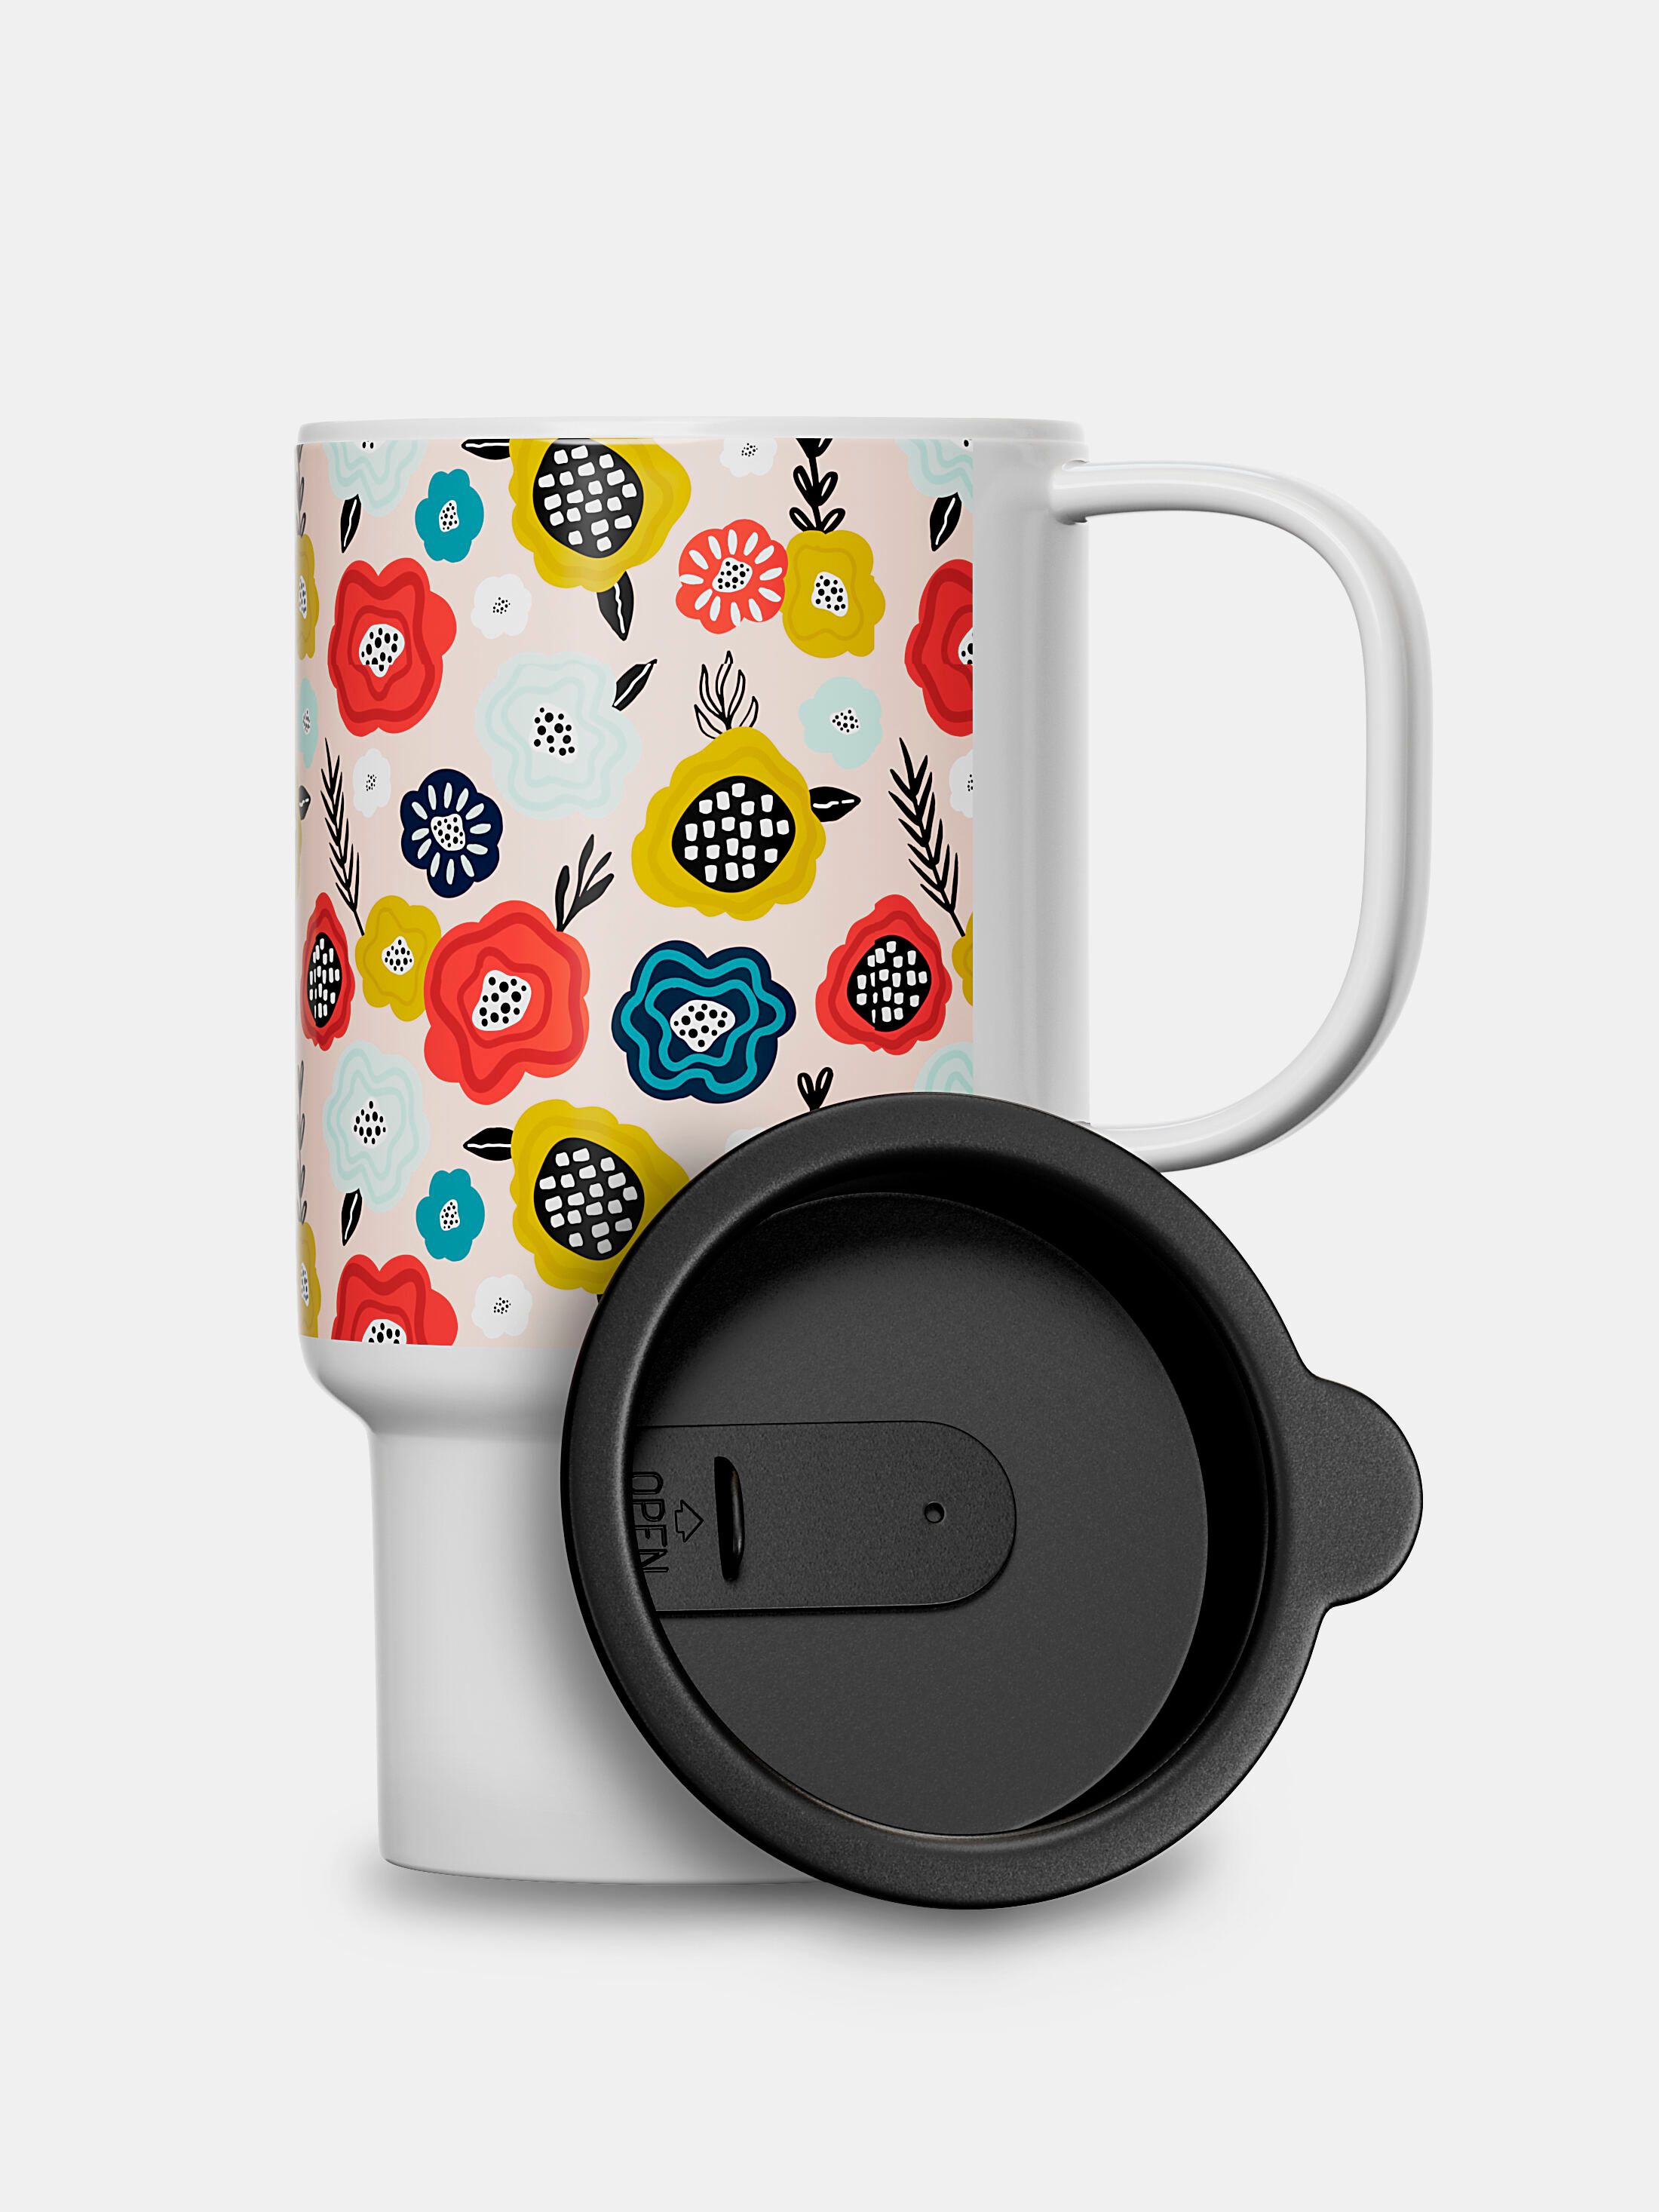 Personalized Travel Mugs, Coffee Tumblers